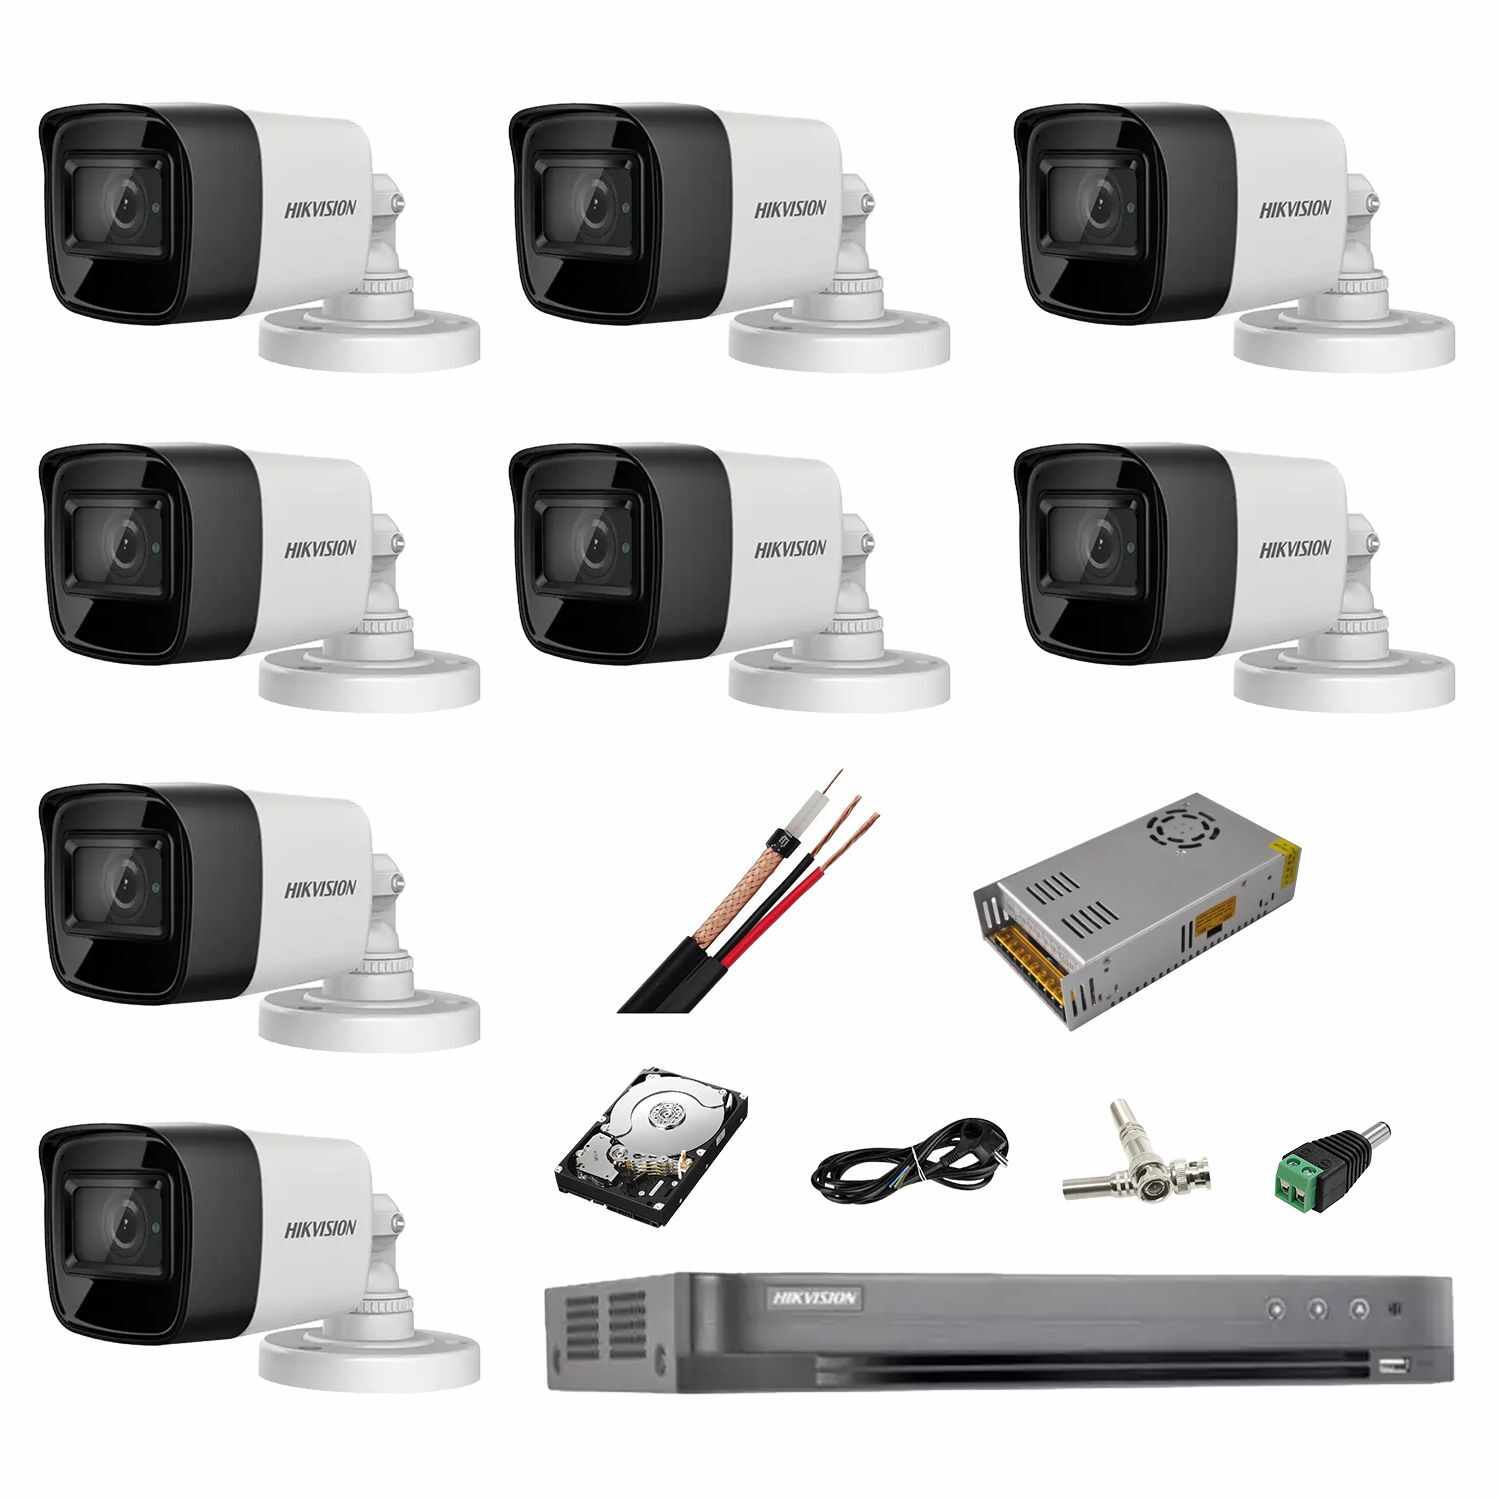 Sistem complet de supraveghere profesional Hikvision Turbo HD, inregistrare 4K / 8 Mp, 8 camere IR 30 m, HDD 2 Tb, 200 m cablu CCTV,vizualizare pe telefon